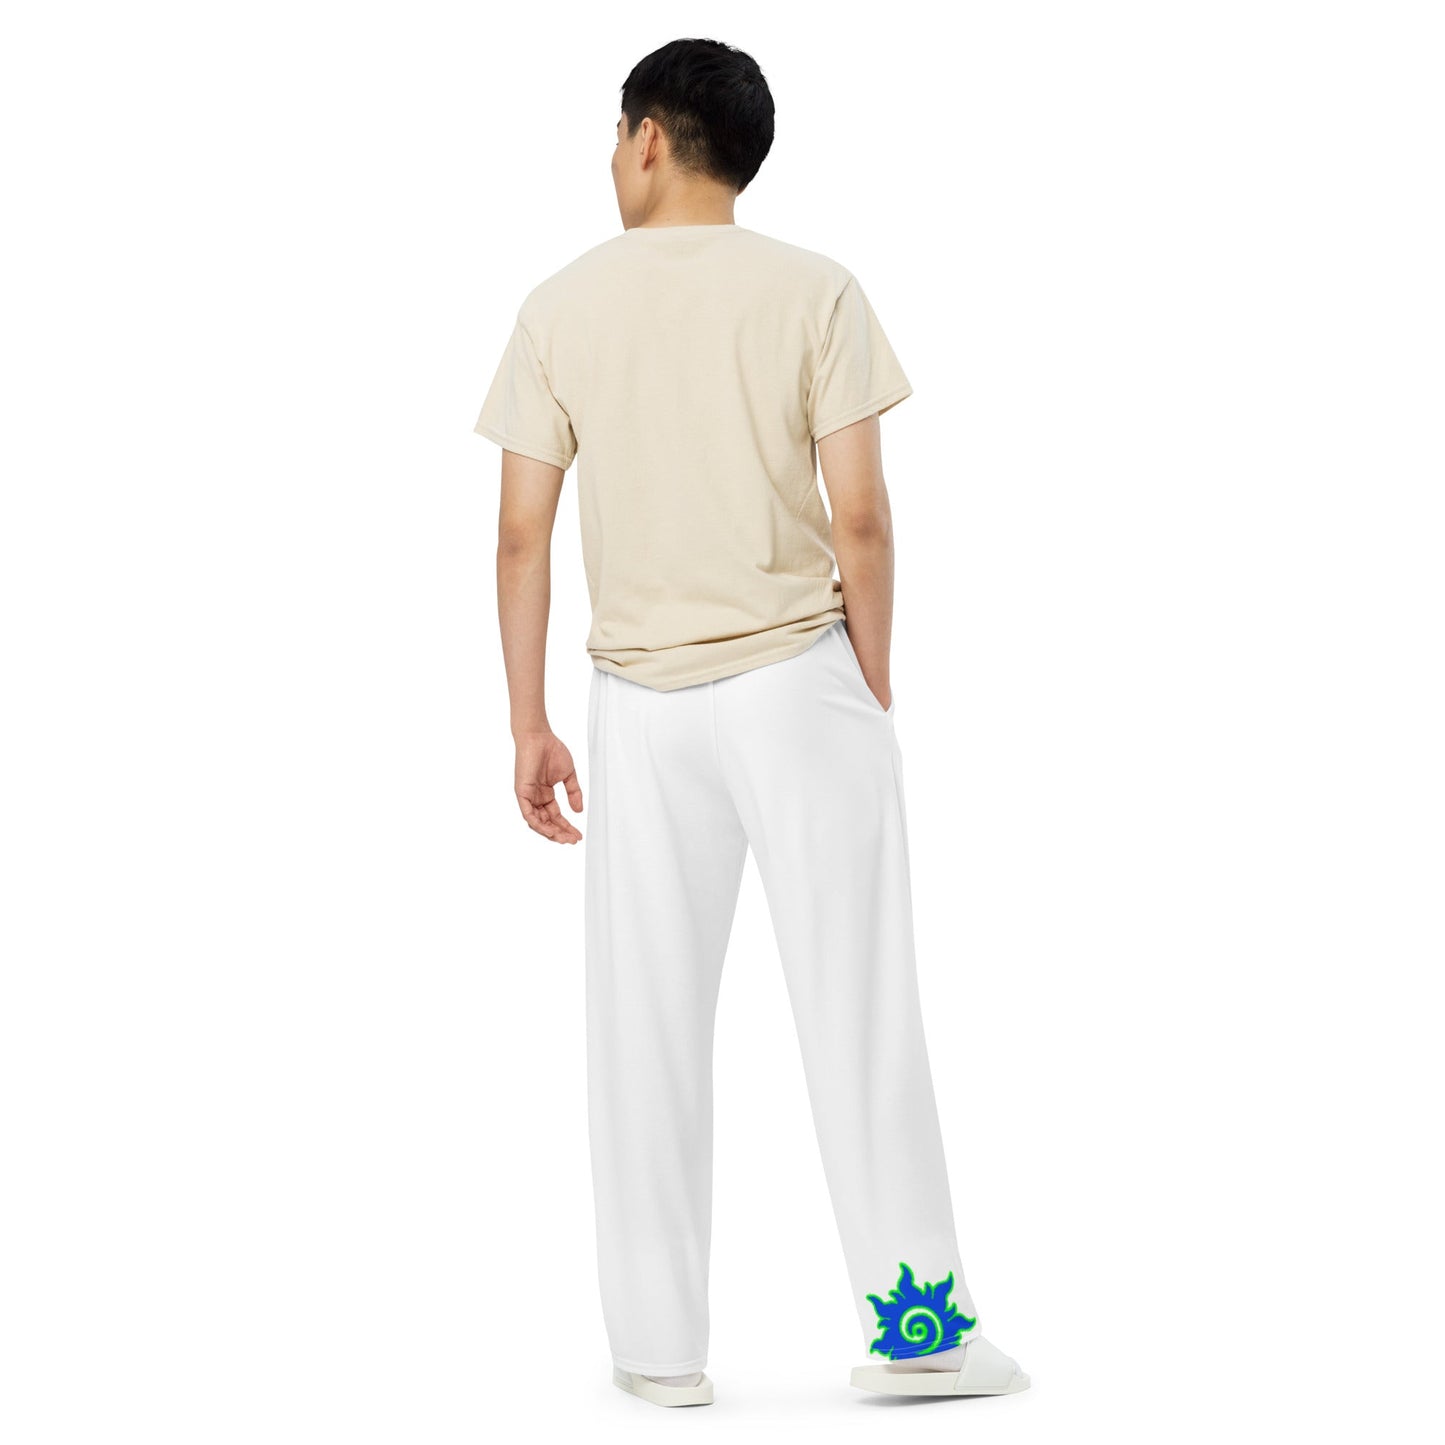 Unisex wide-leg pants - Image #4